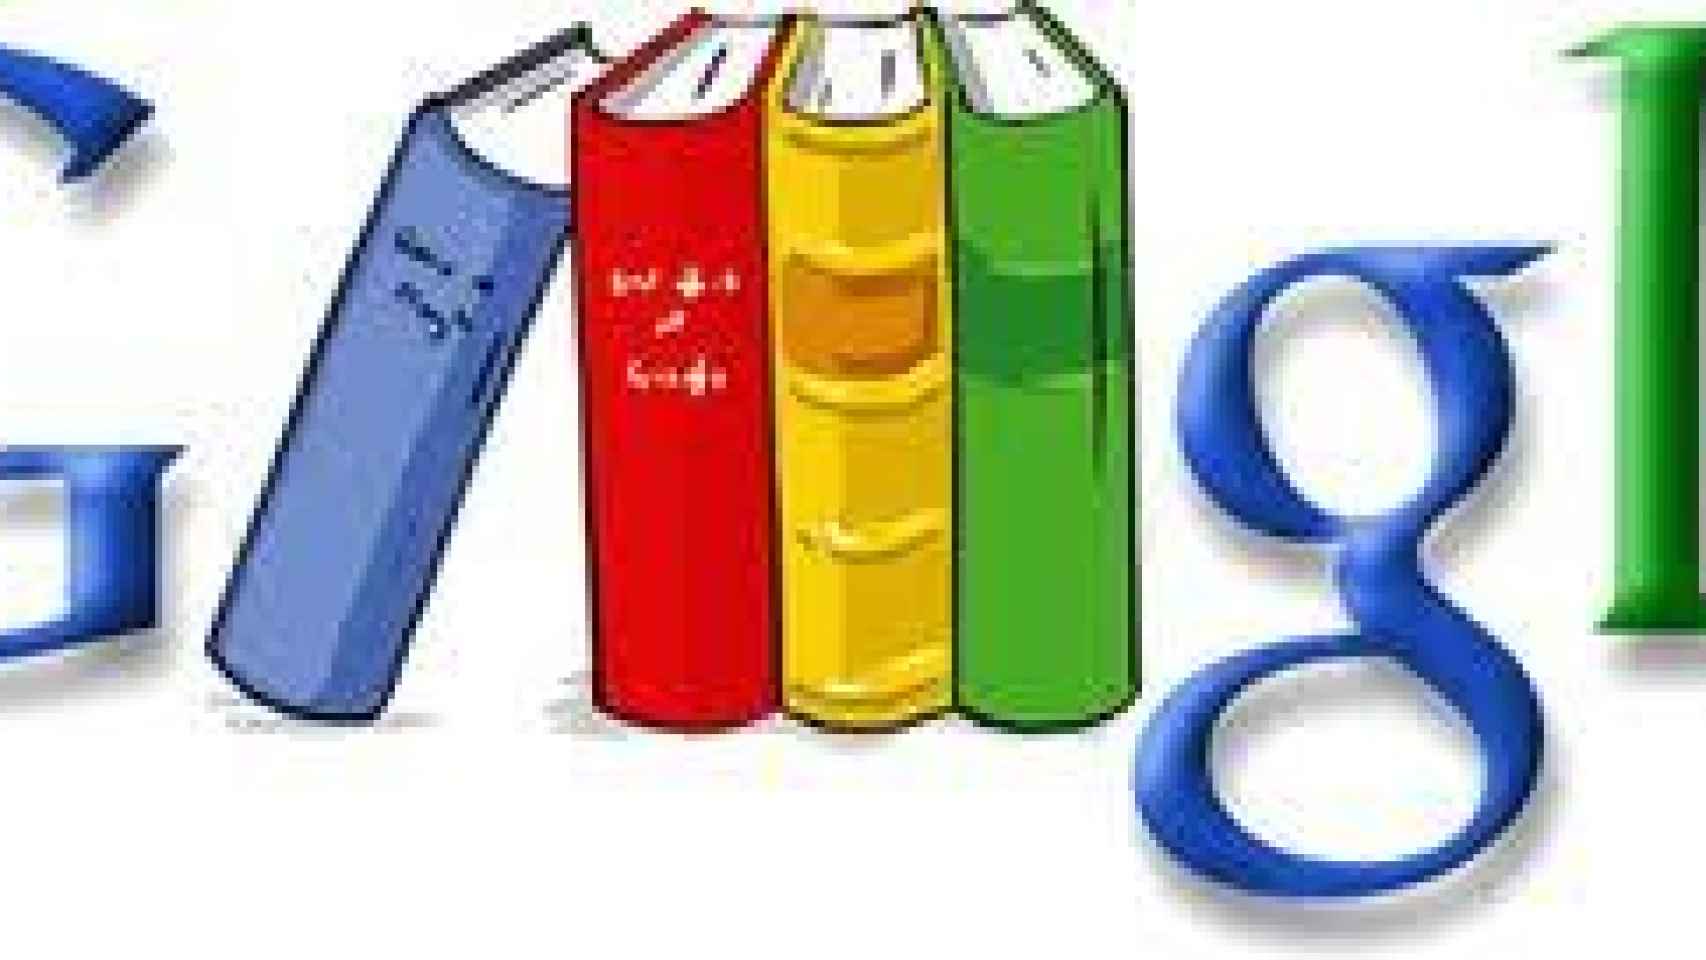 googlebook-logo